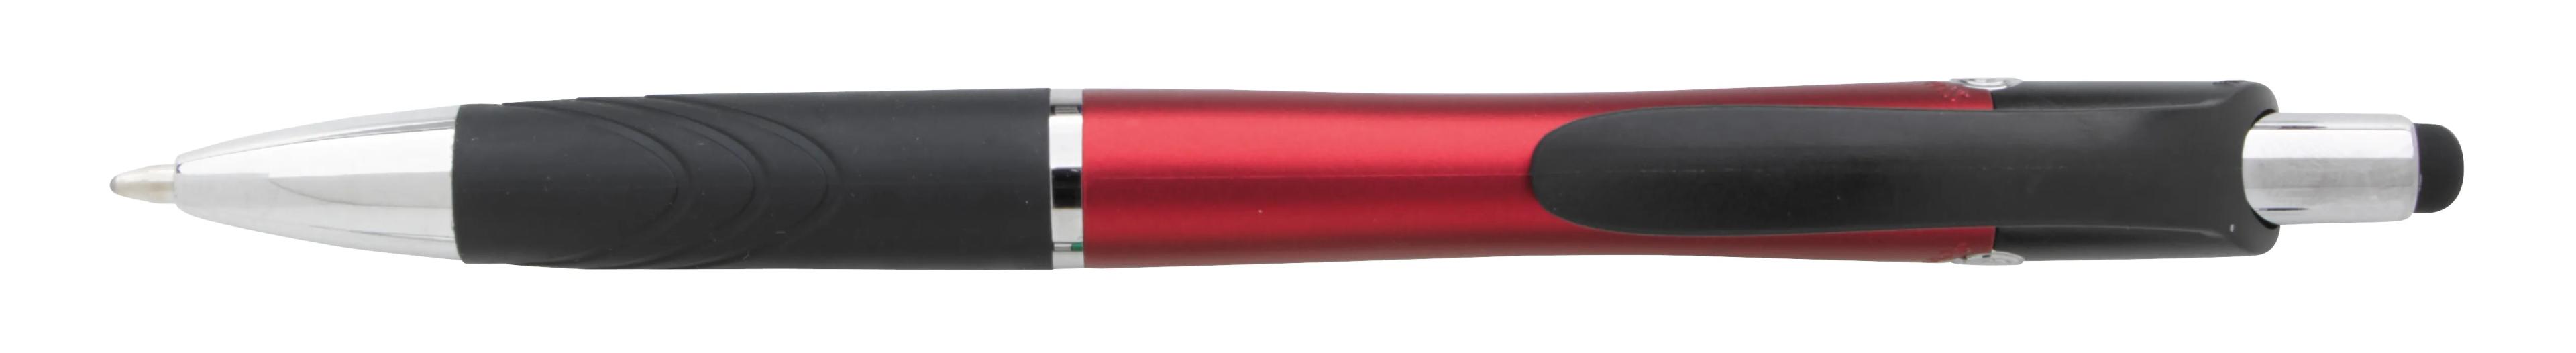 Souvenir® Emblem Stylus Pen 25 of 37